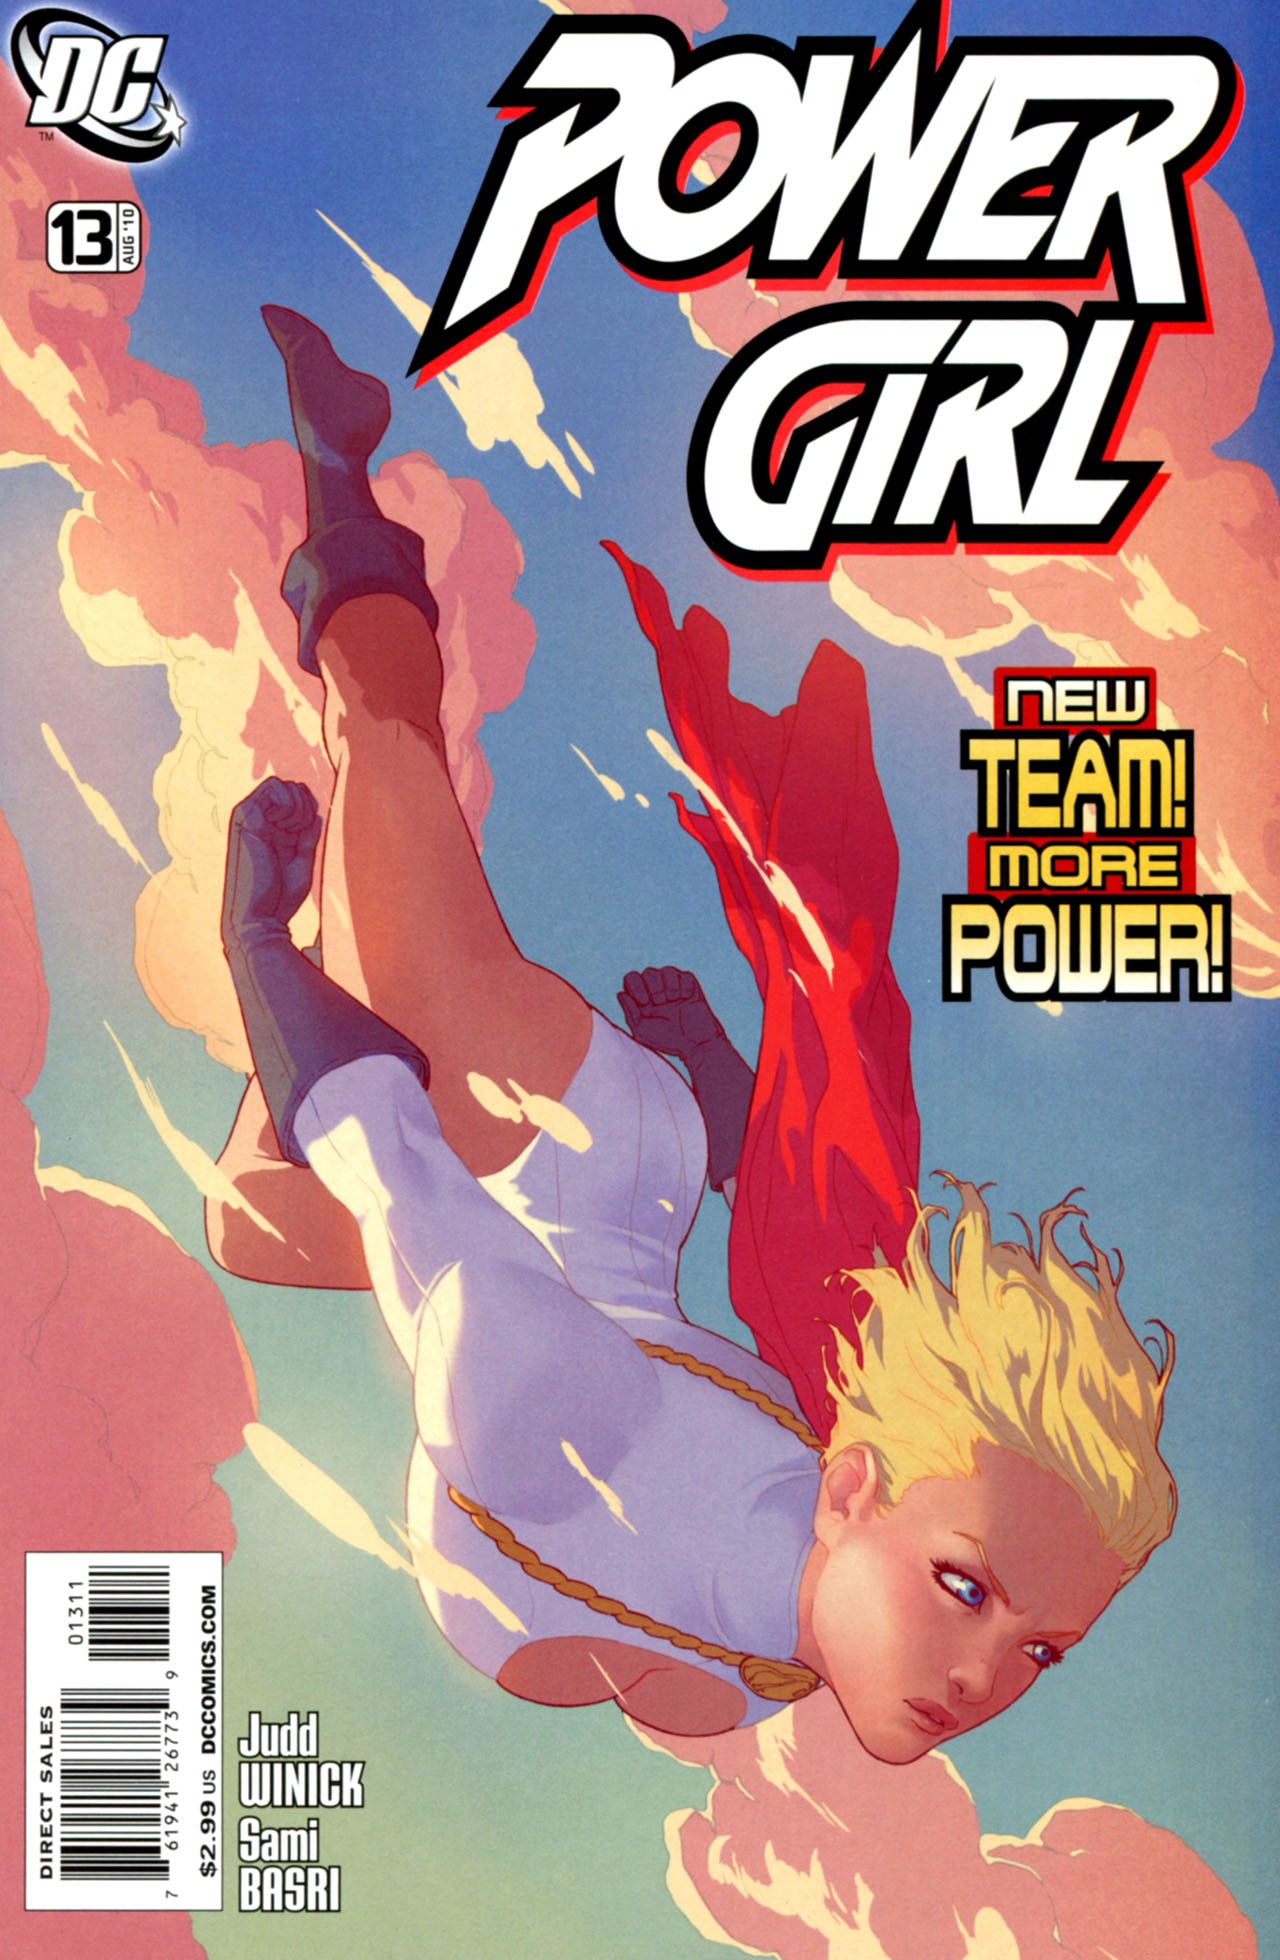 Power Girl Vol. 2 #13